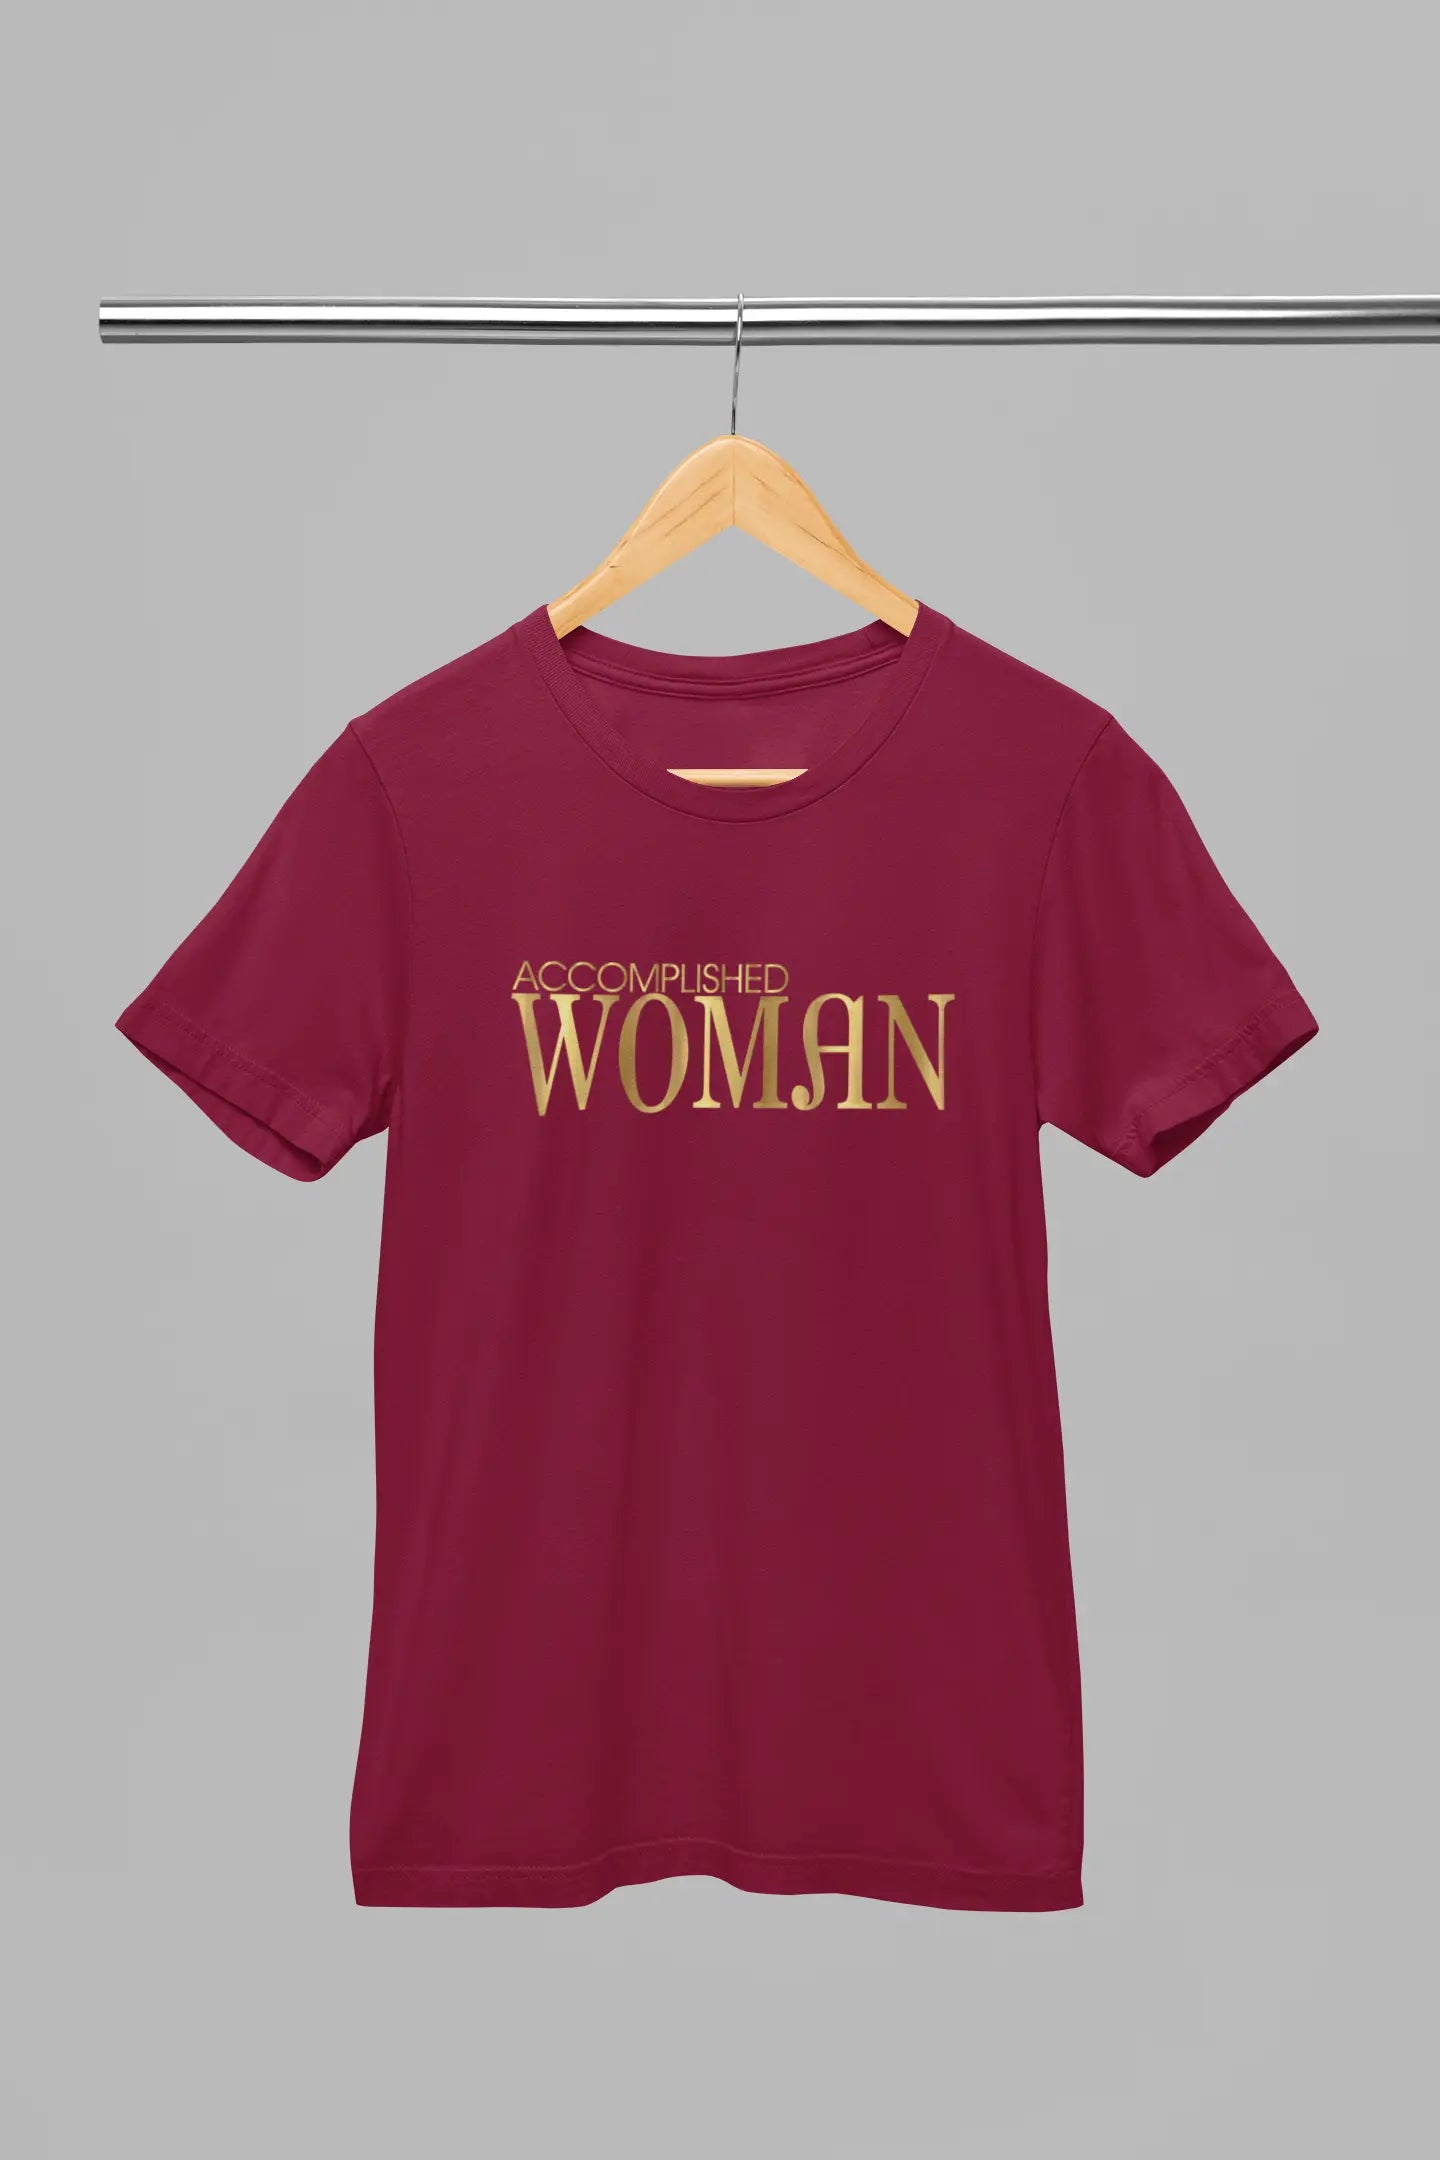 Accomplished Woman T shirt - Image #3